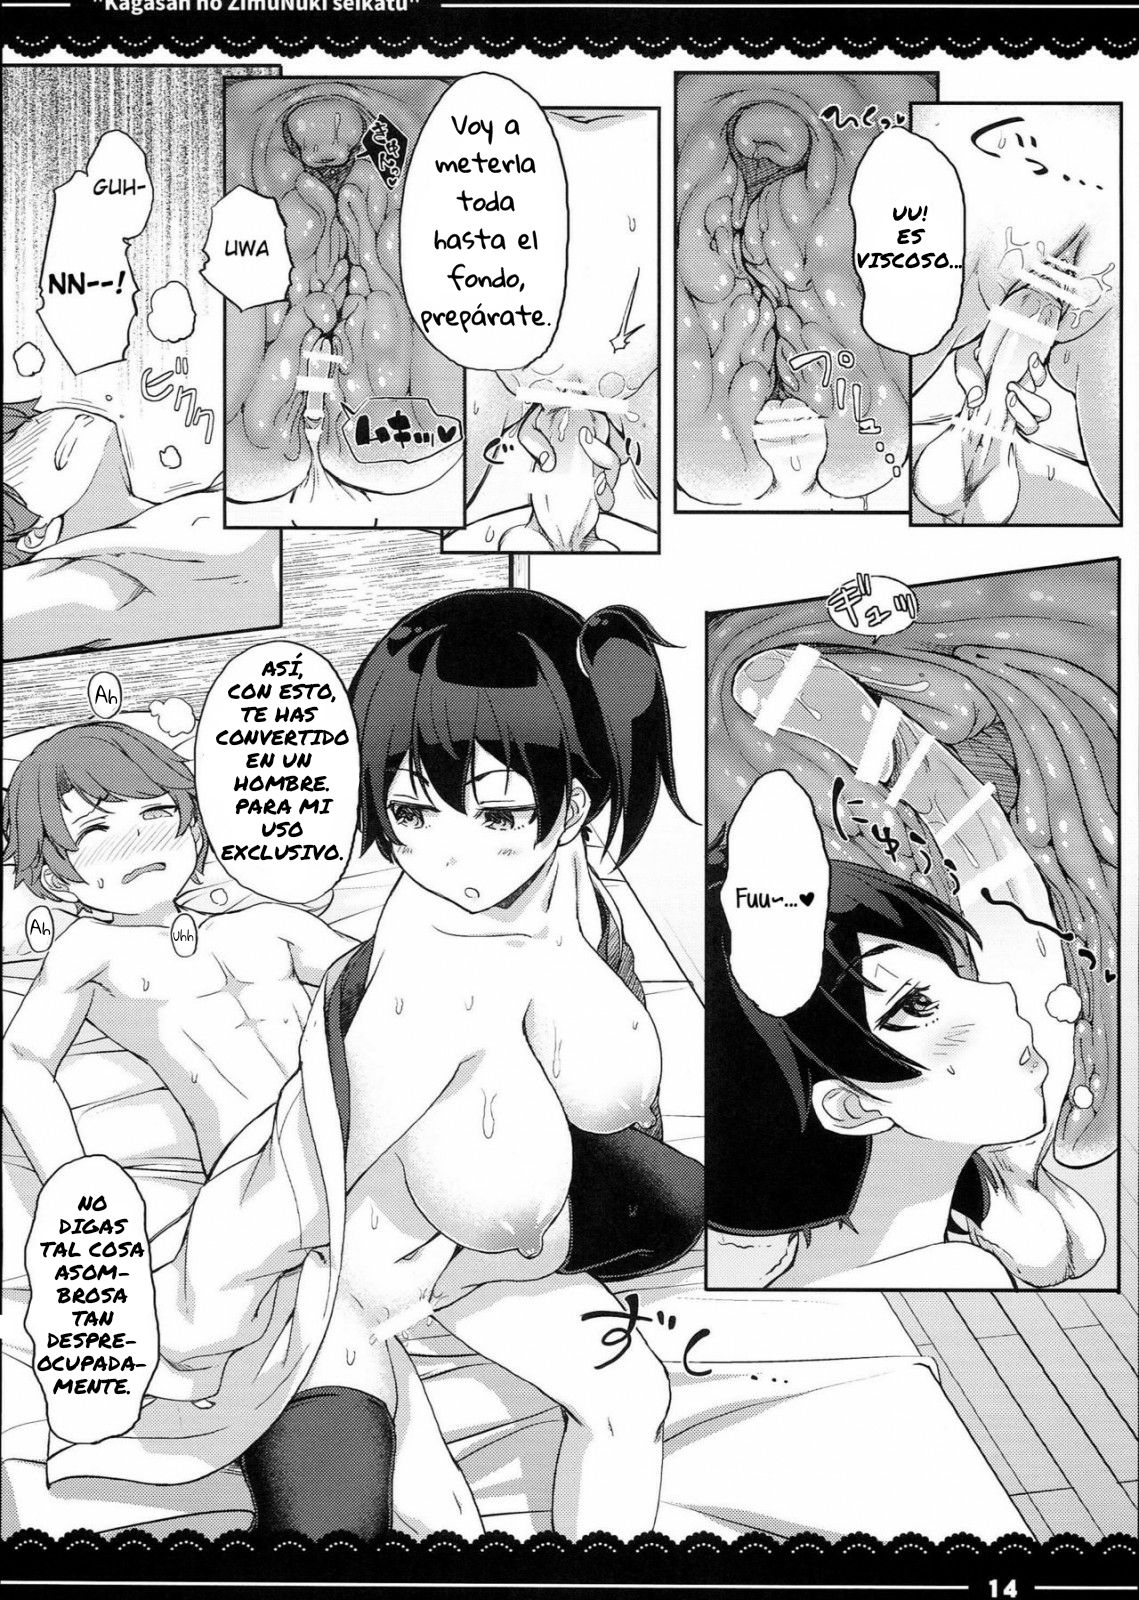 kaga-san's work skipping sex life-chapter 1 - 14